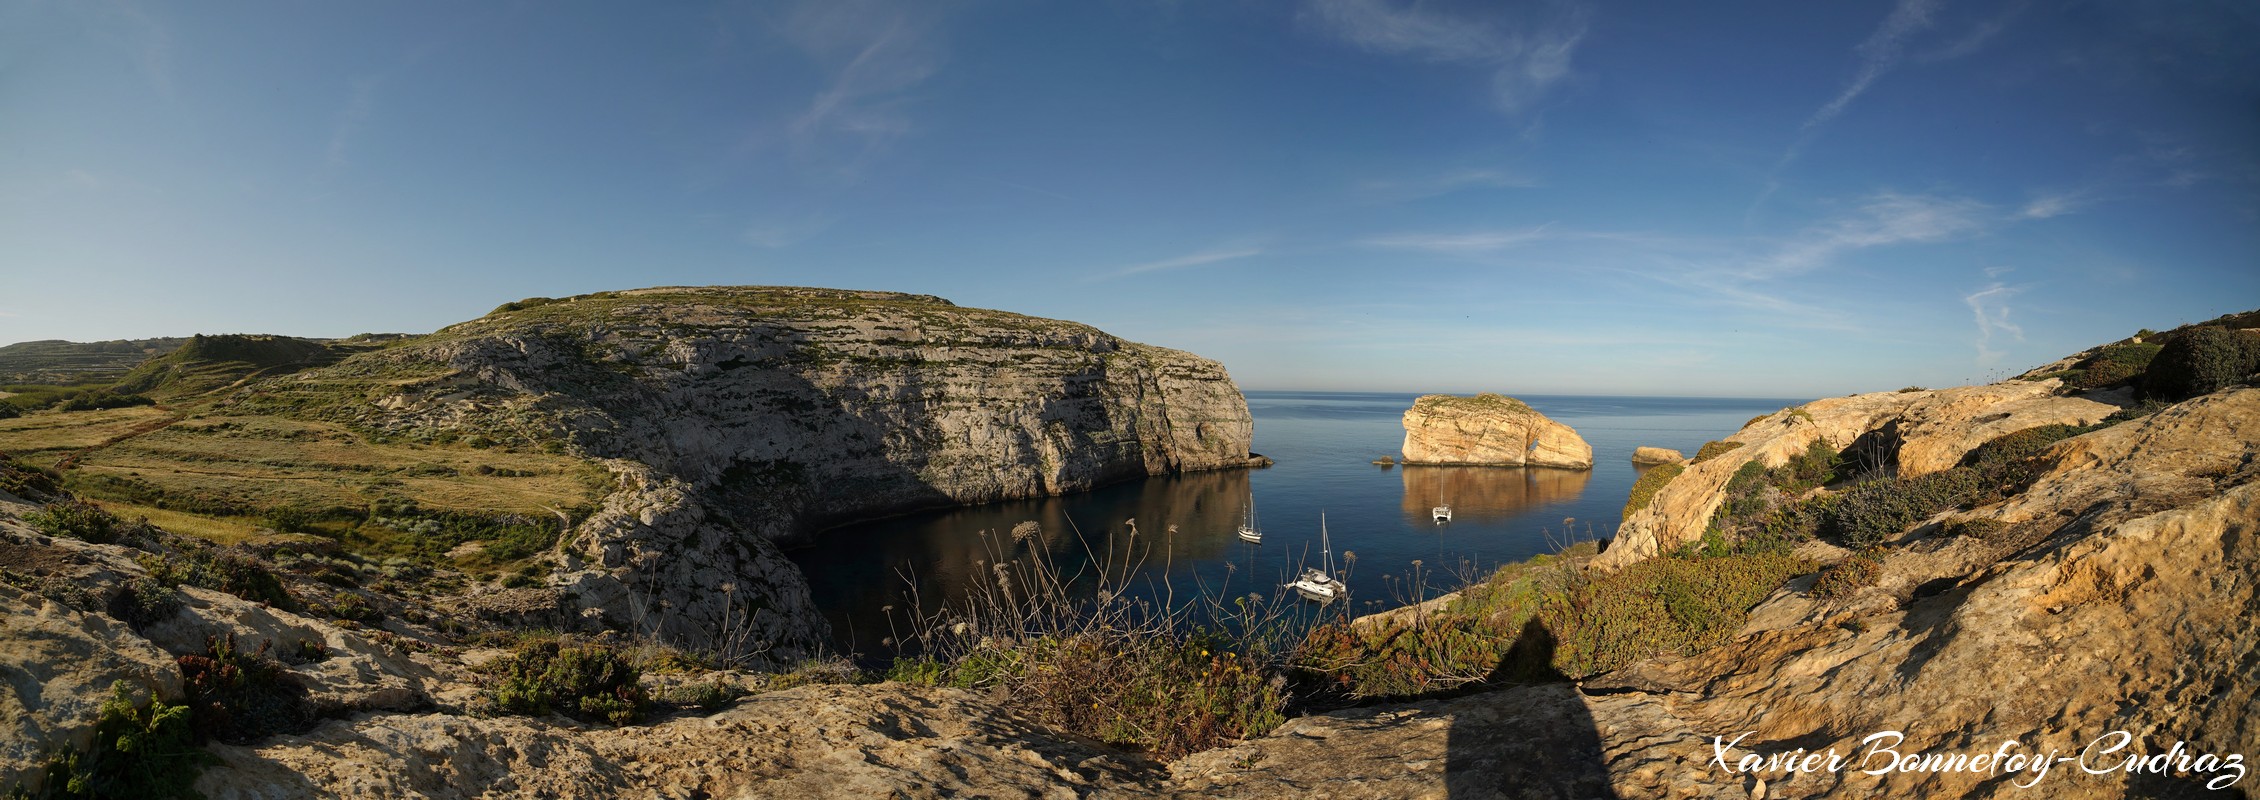 Gozo - Dwejra Bay and Fungus Rock - Panorama
Mots-clés: Dwejra geo:lat=36.04808838 geo:lon=14.19286072 geotagged Malte MLT Saint Lawrence San Lawrenz Malta Gozo paysage Fungus Rock Mer Dwejra Bay panorama